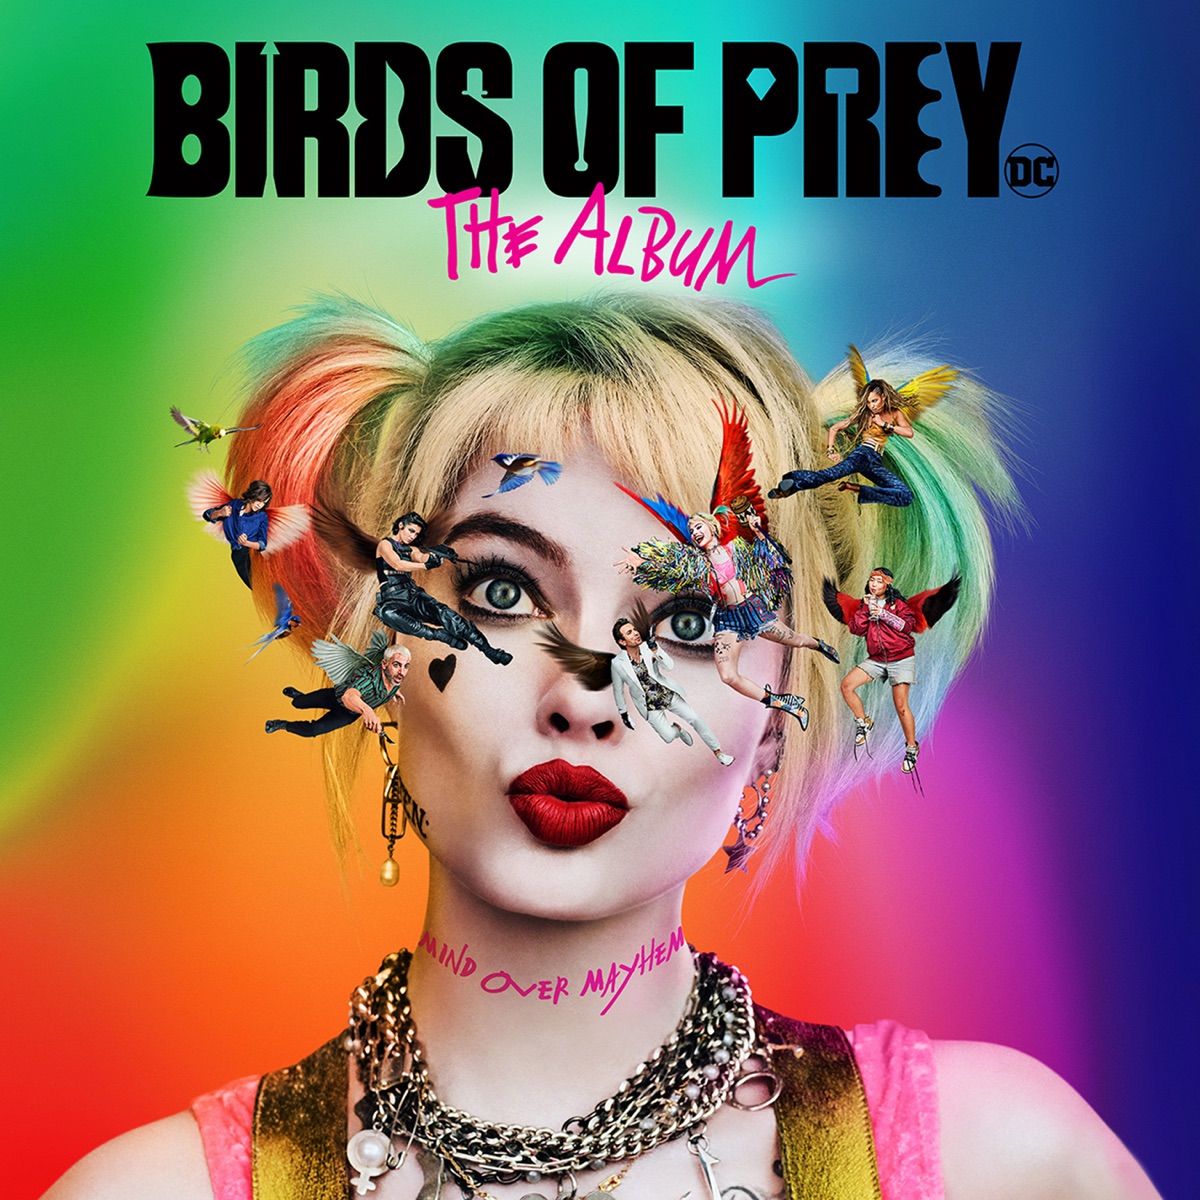 Listen to the Birds of Prey Soundtrack